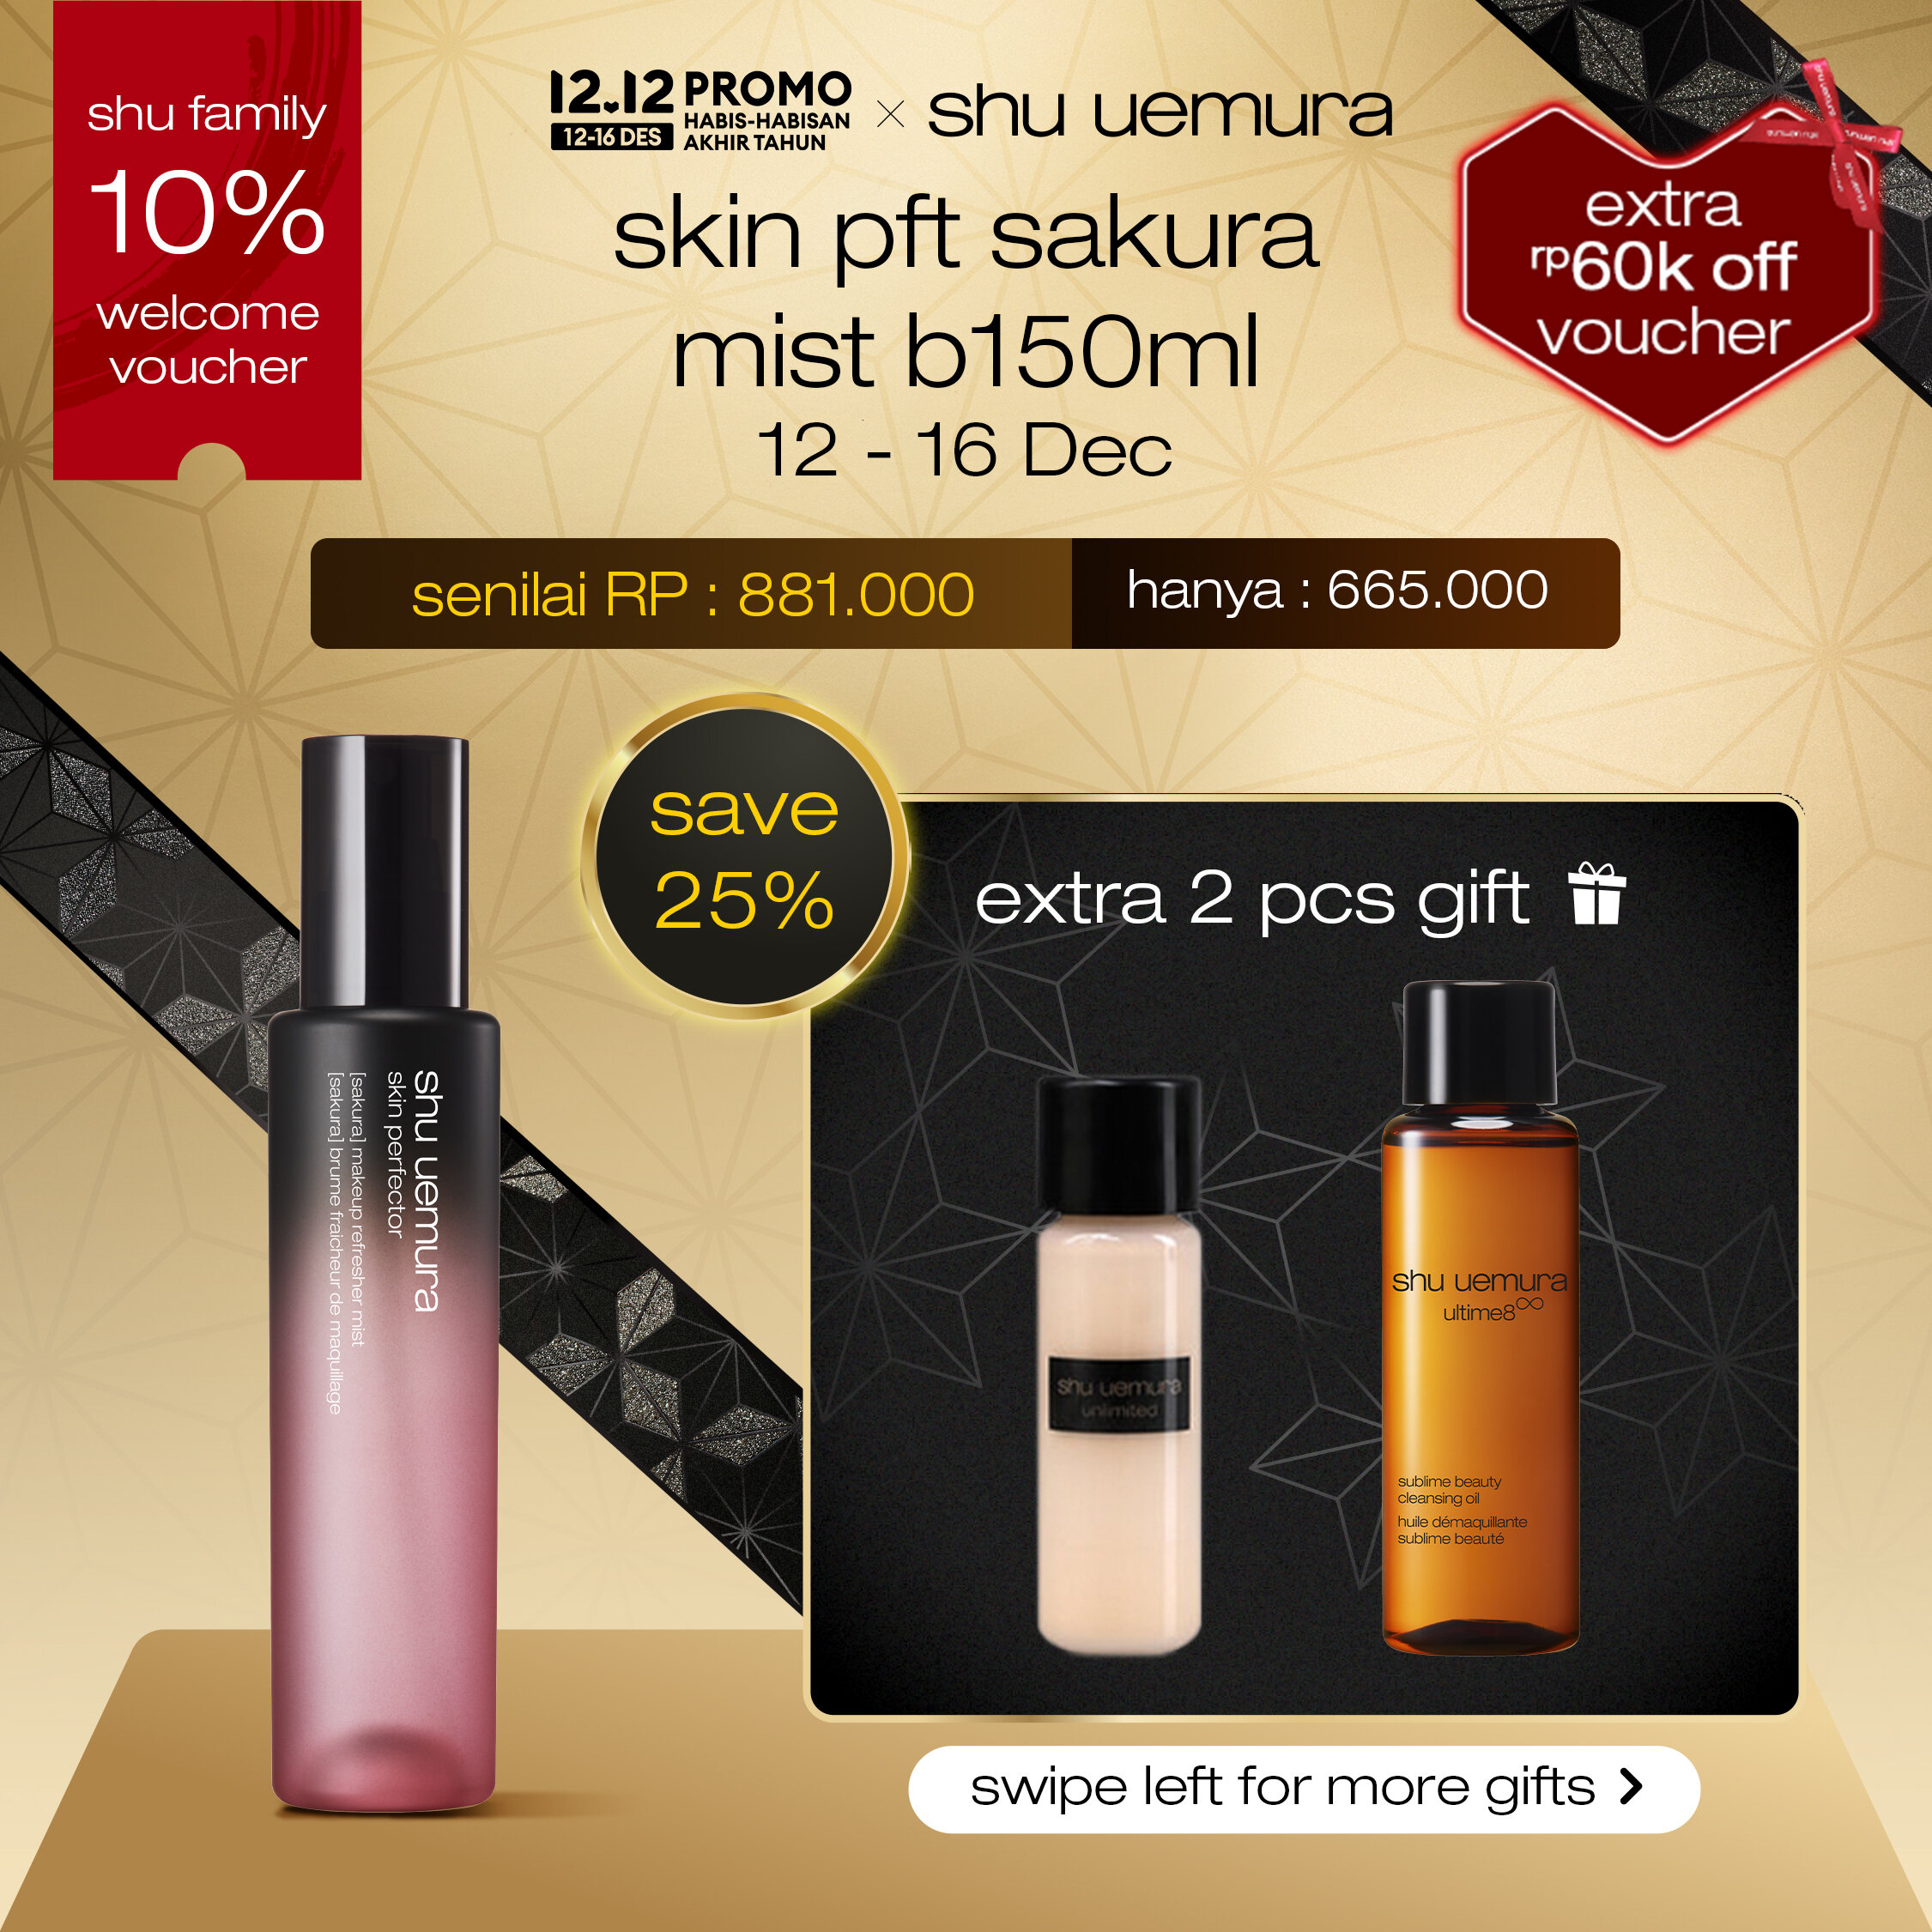 12.12) SAVE 25% shu uemura skin perfector makeup refresher sakura mist  150ml - perfect makeup touch-up solution